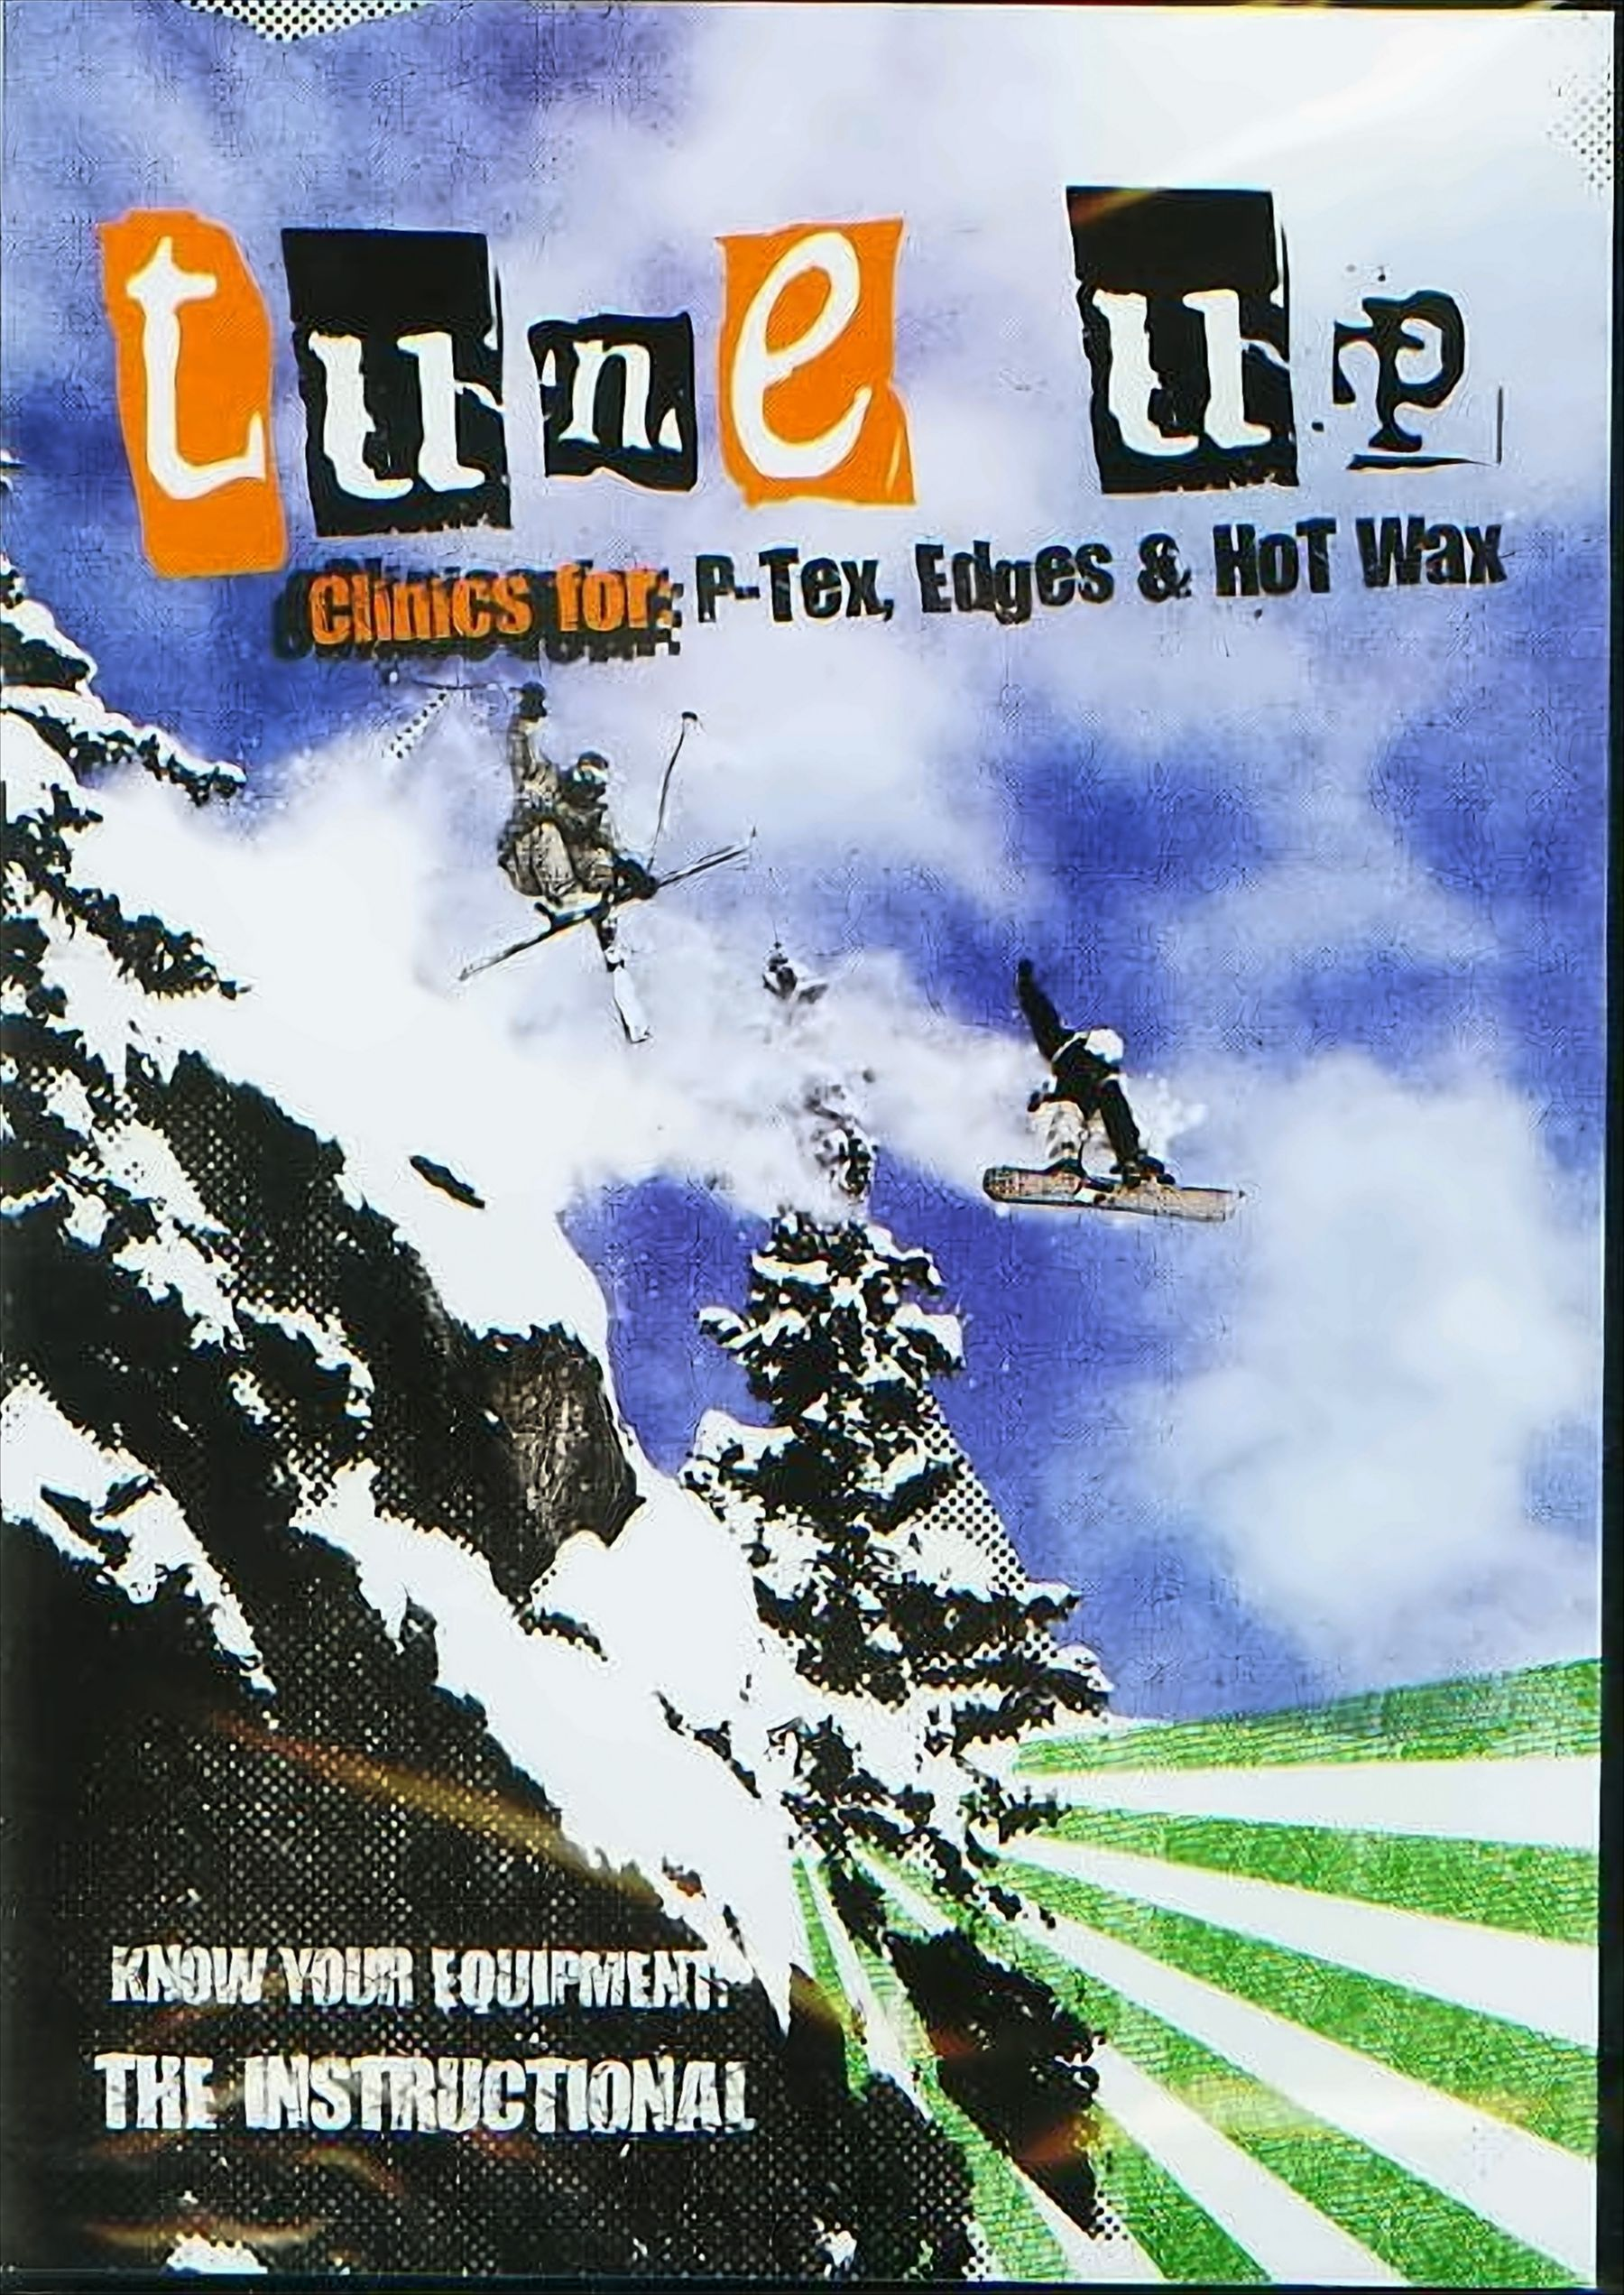 Tune up, Hot Edges + for: DVD P-Tex, Wax Clinics